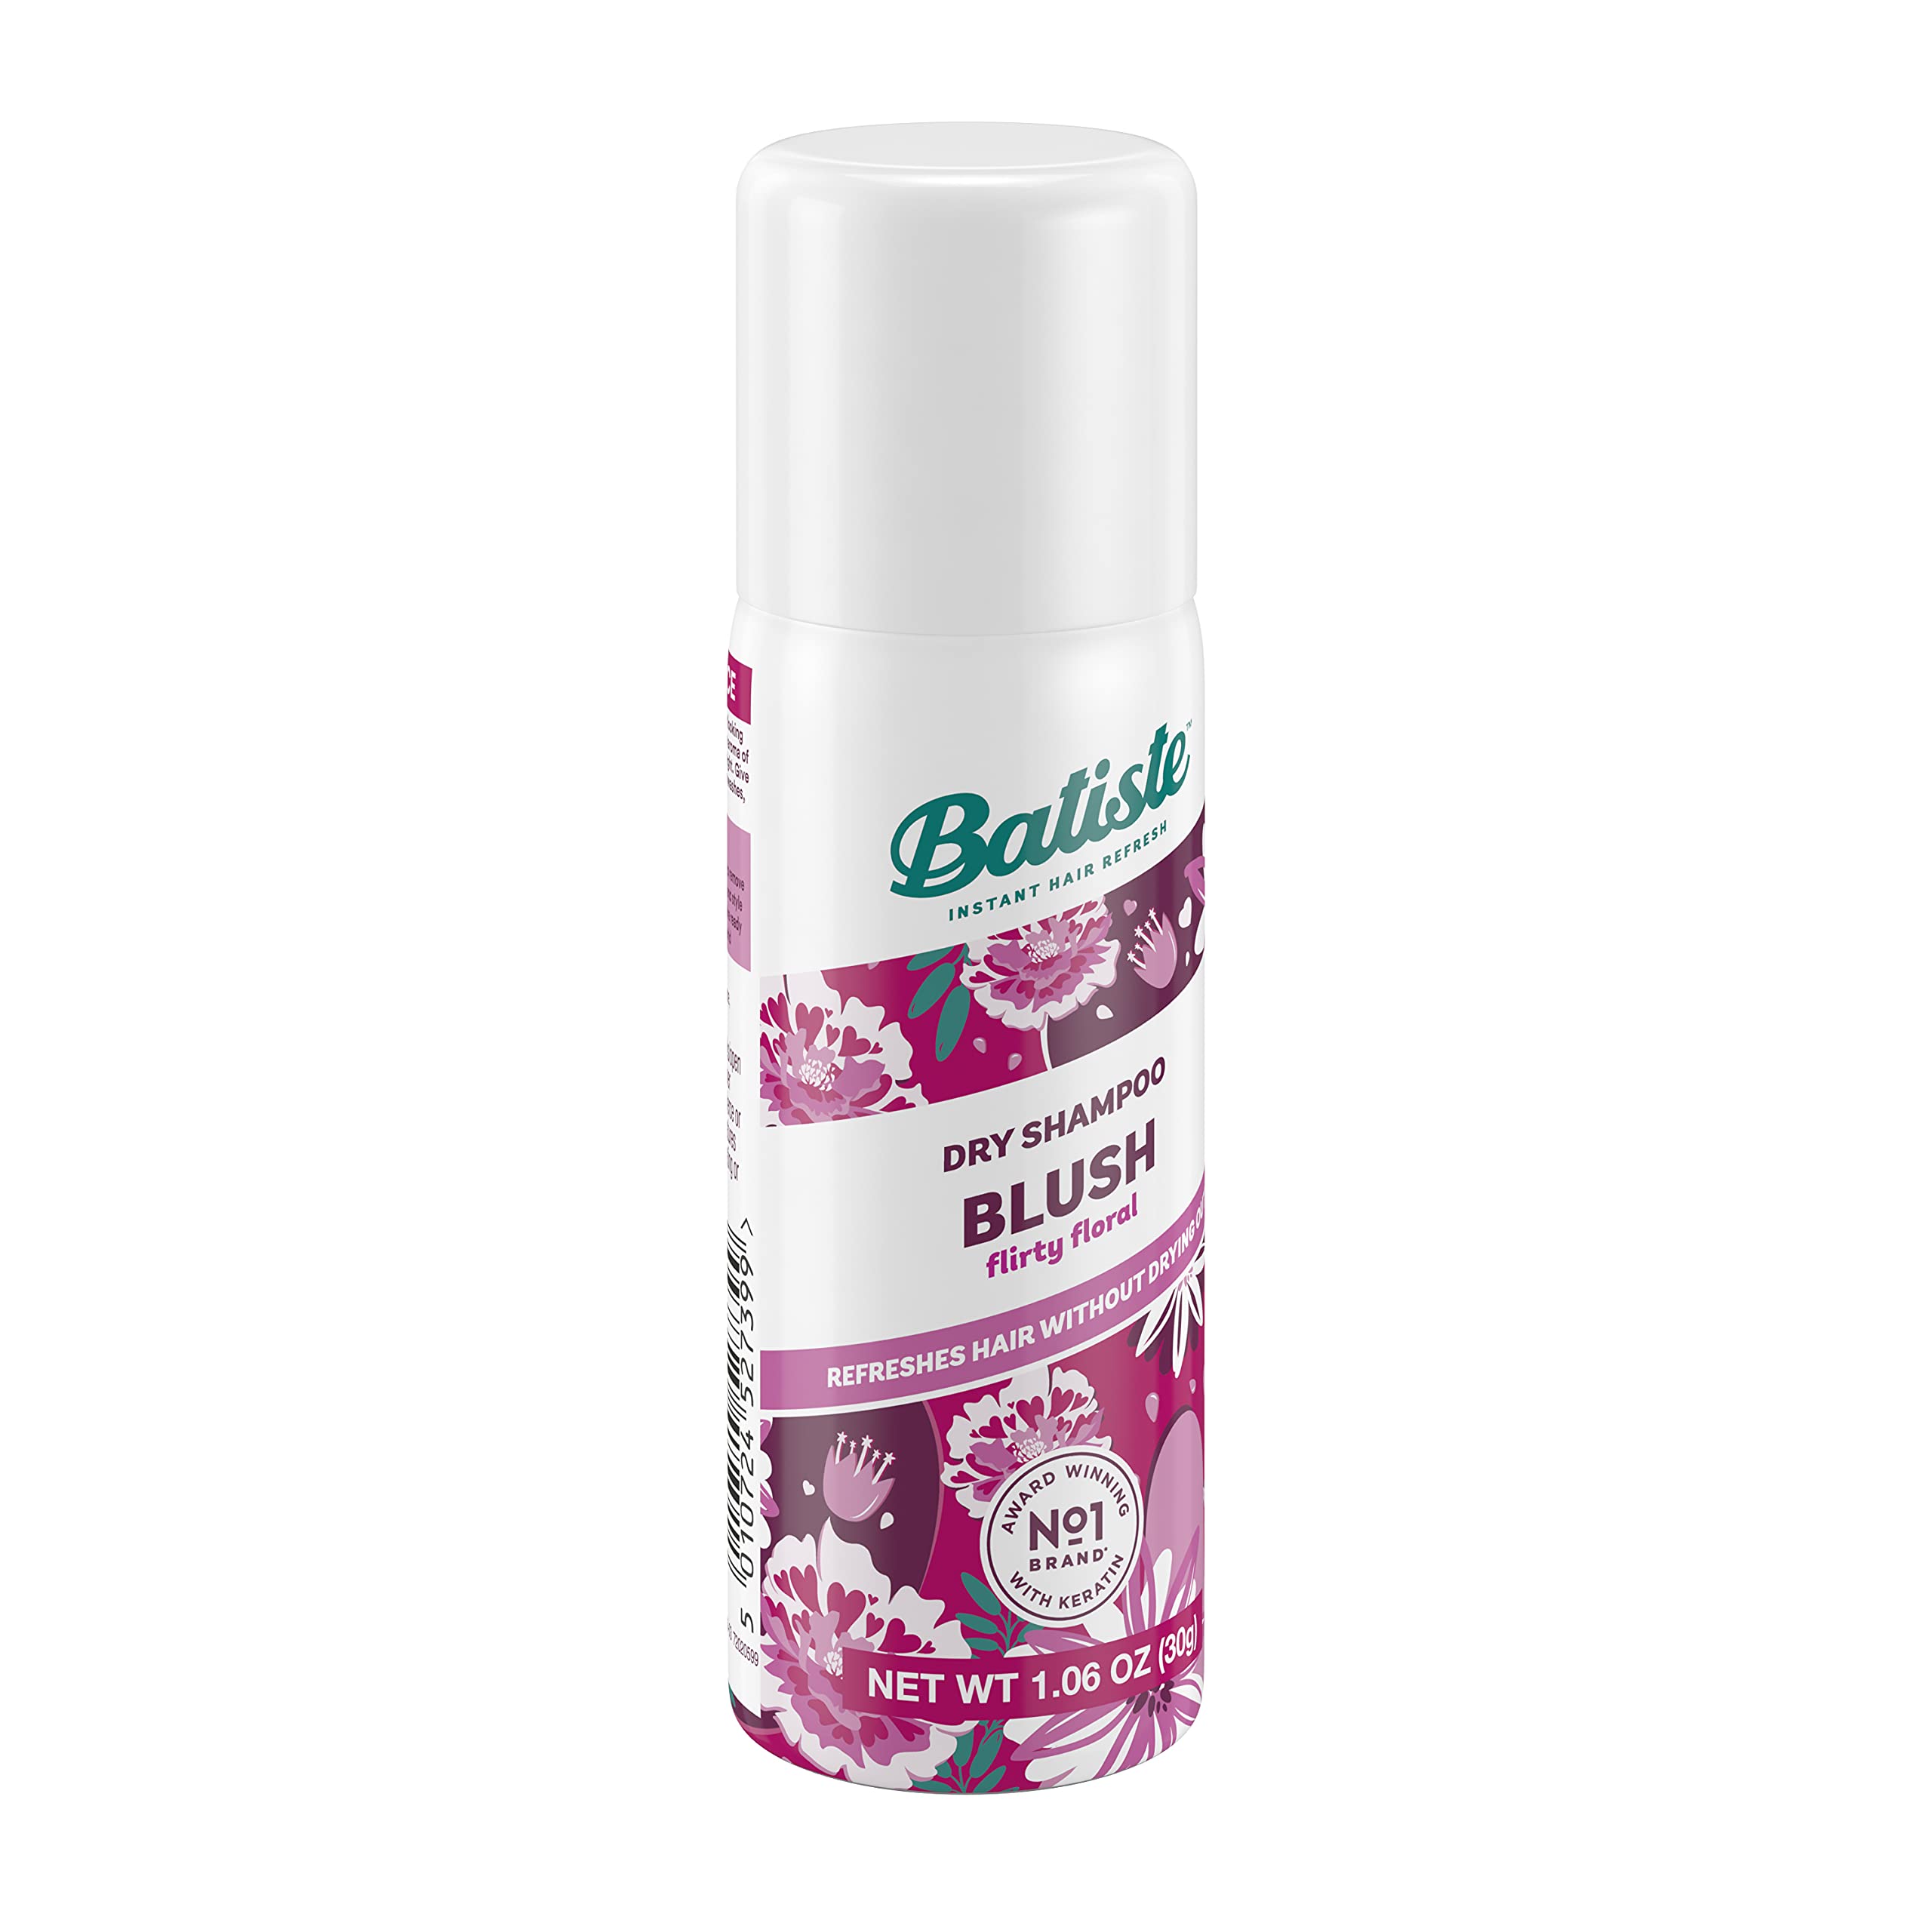 Batiste Dry Shampoo - Floral & Fruity Blush 1.6oz (PACK OF 3)